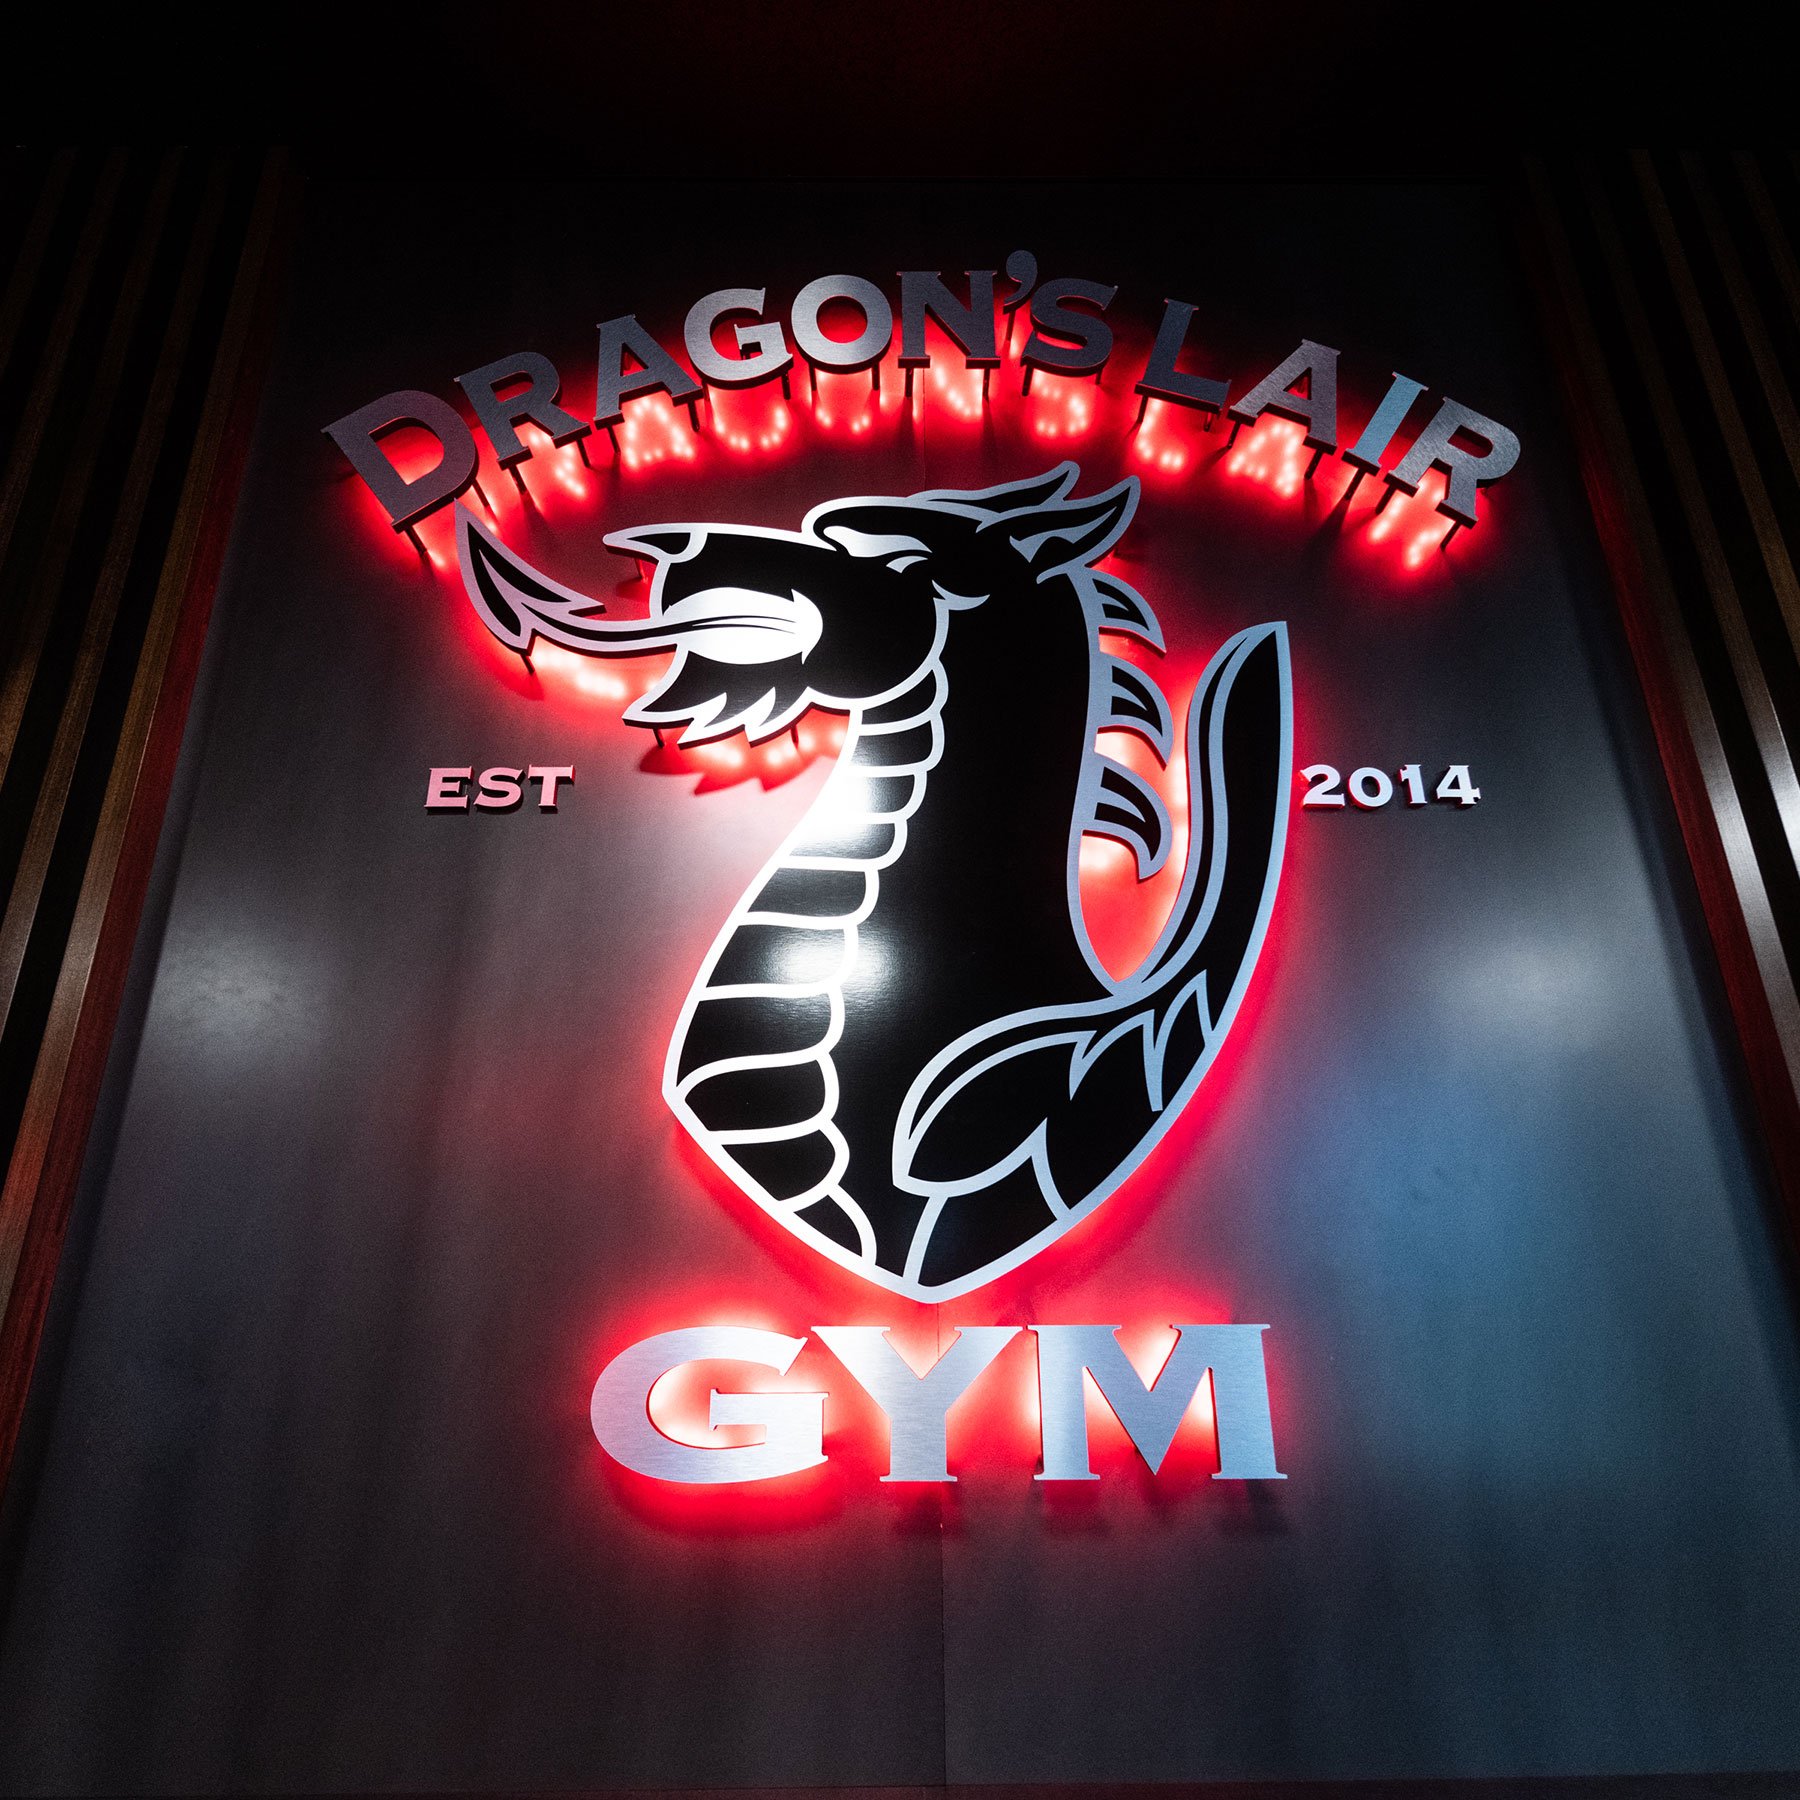 Gym Design  The Dragon's Lair Gym in Las Vegas 